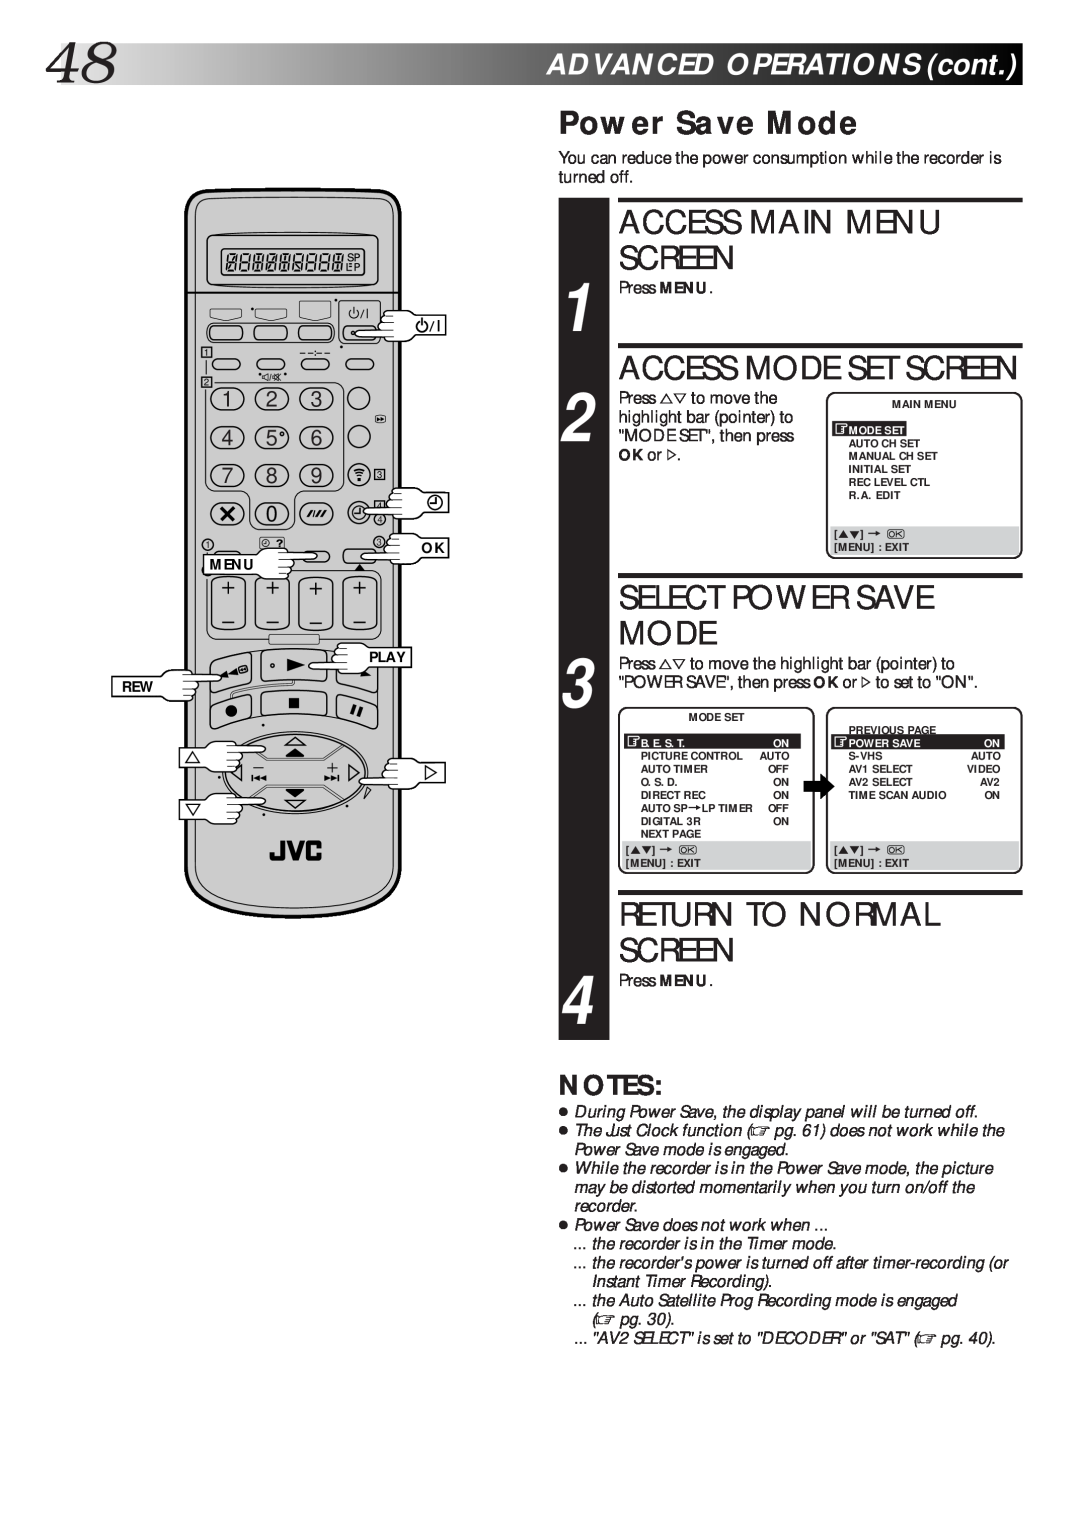 JVC HR-S9600EK setup guide 48ADVANCEDOPERATIONScont, Power Save Mode, Select Power Save, Access Main Menu, Screen 